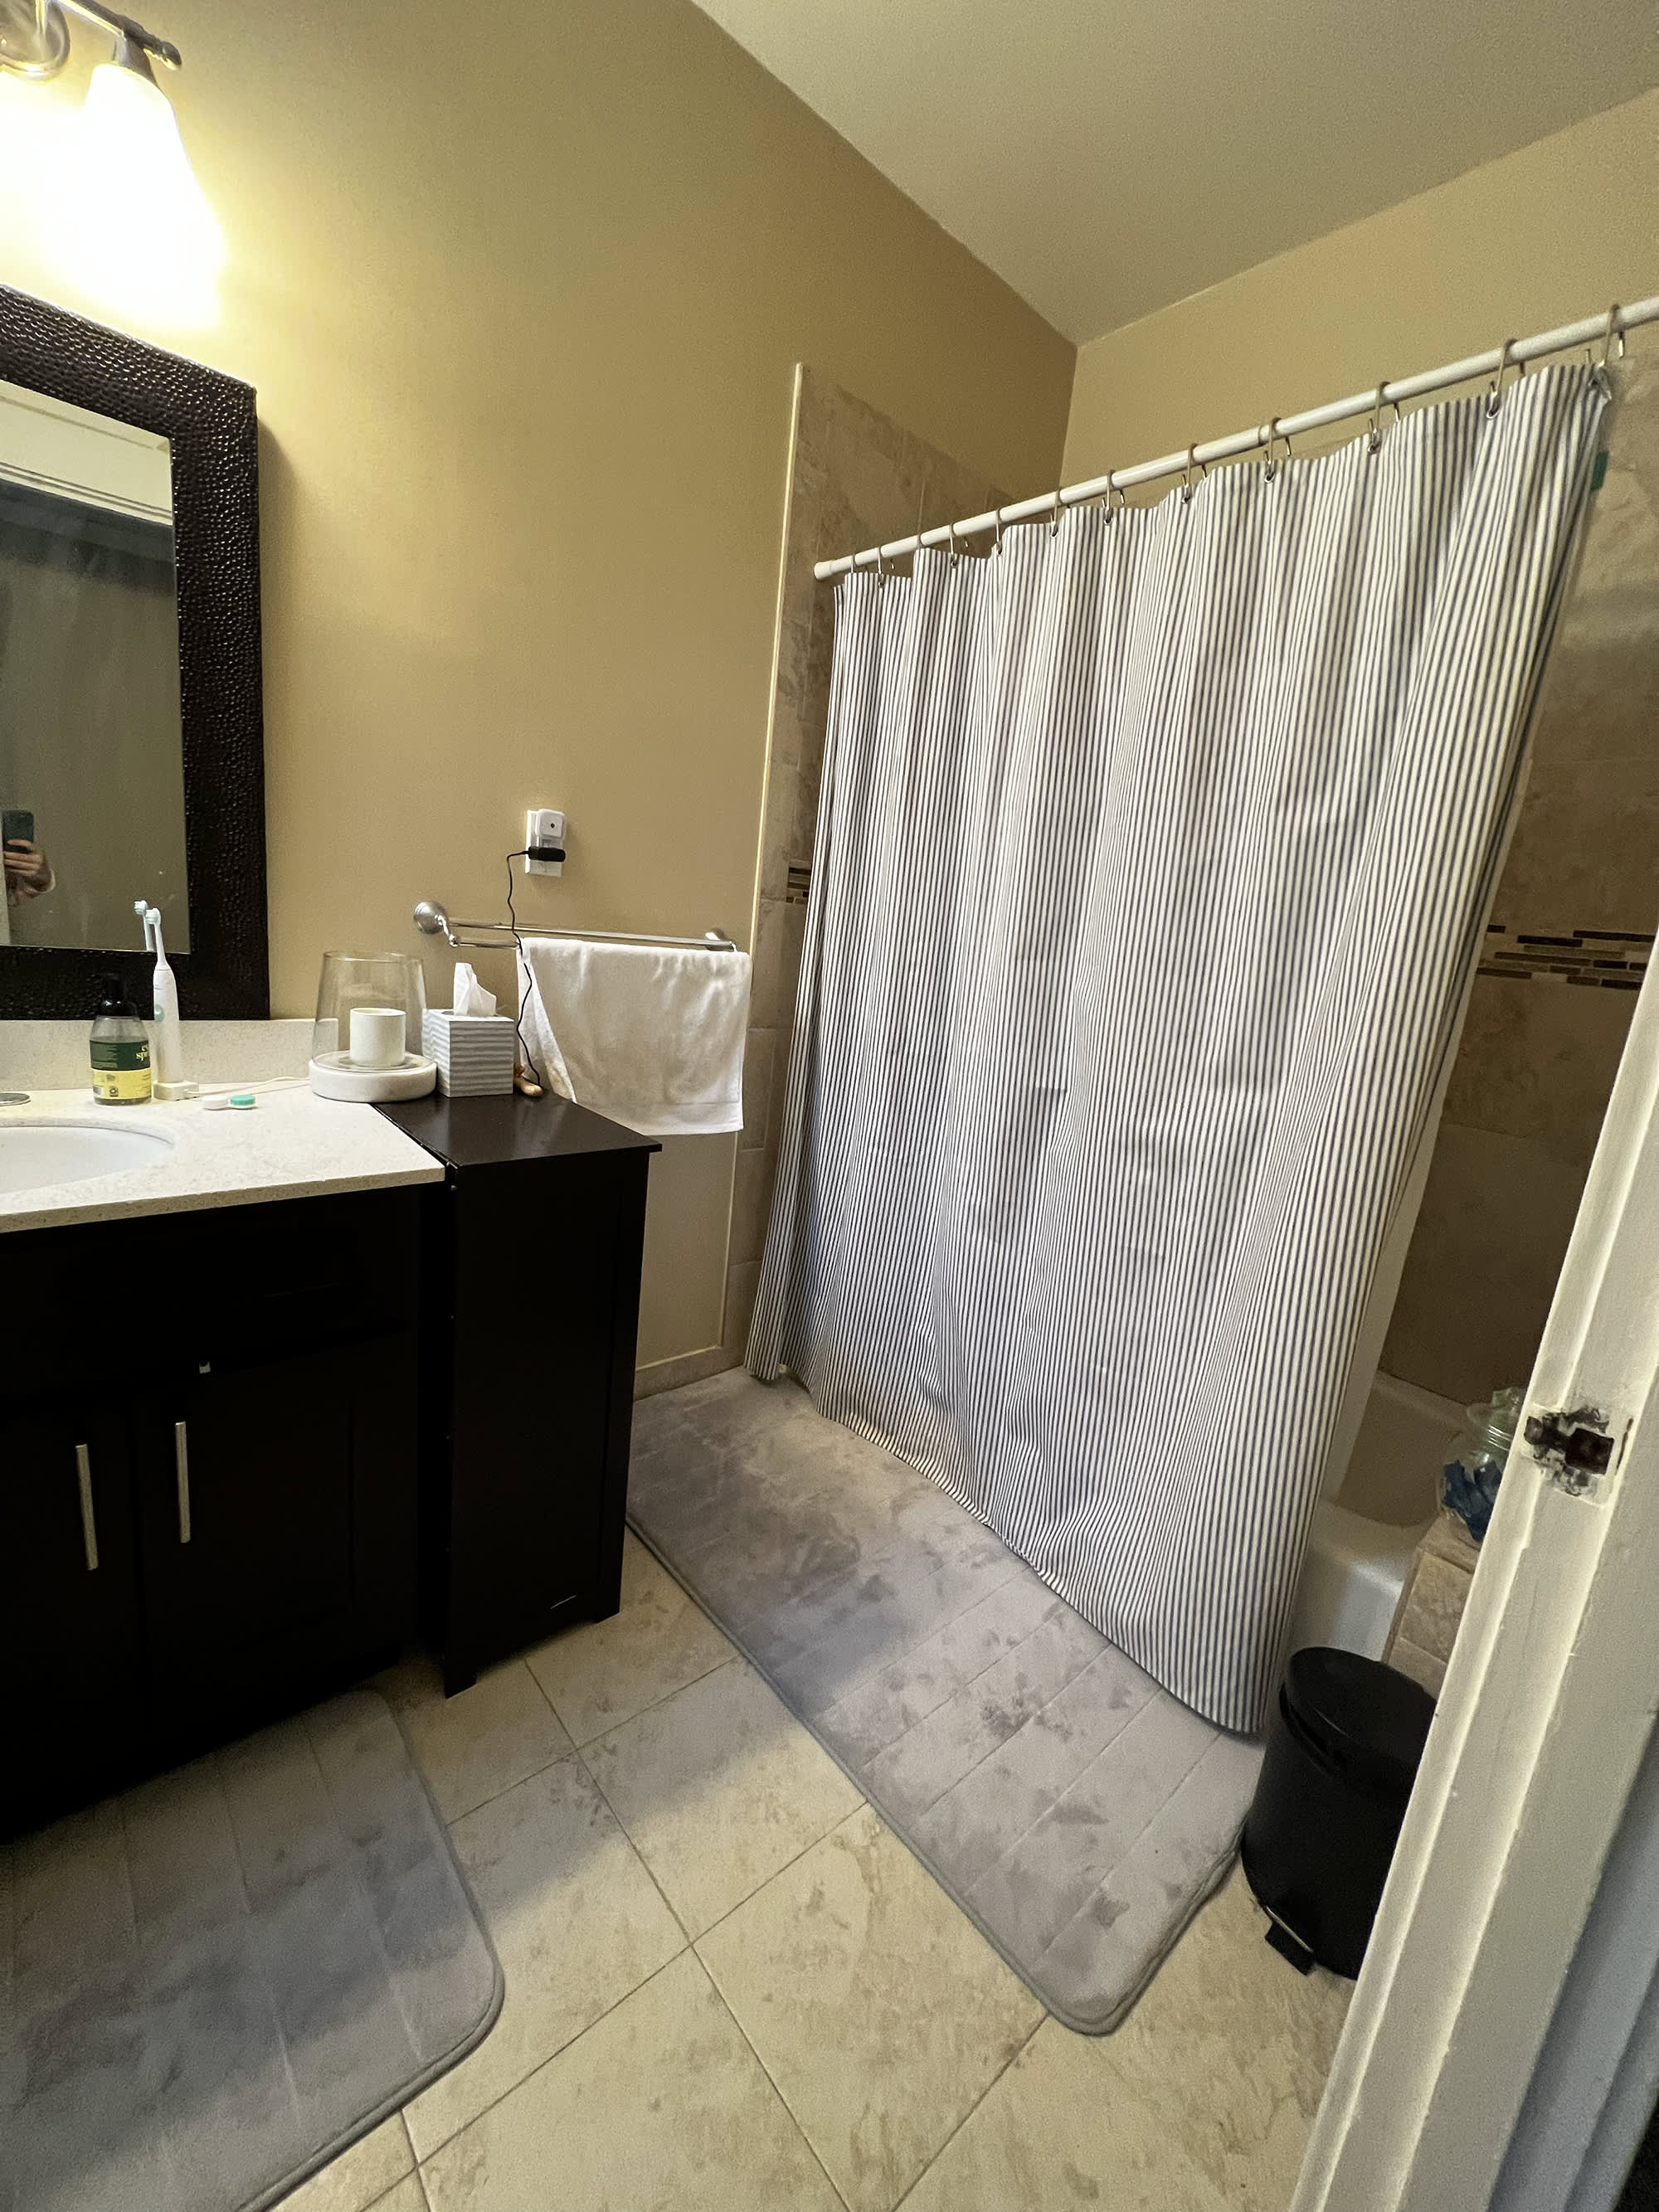 https://cdn.apartmenttherapy.info/image/upload/v1687800914/at/real-estate/2023-06/split-bathroom/shower-1.jpg